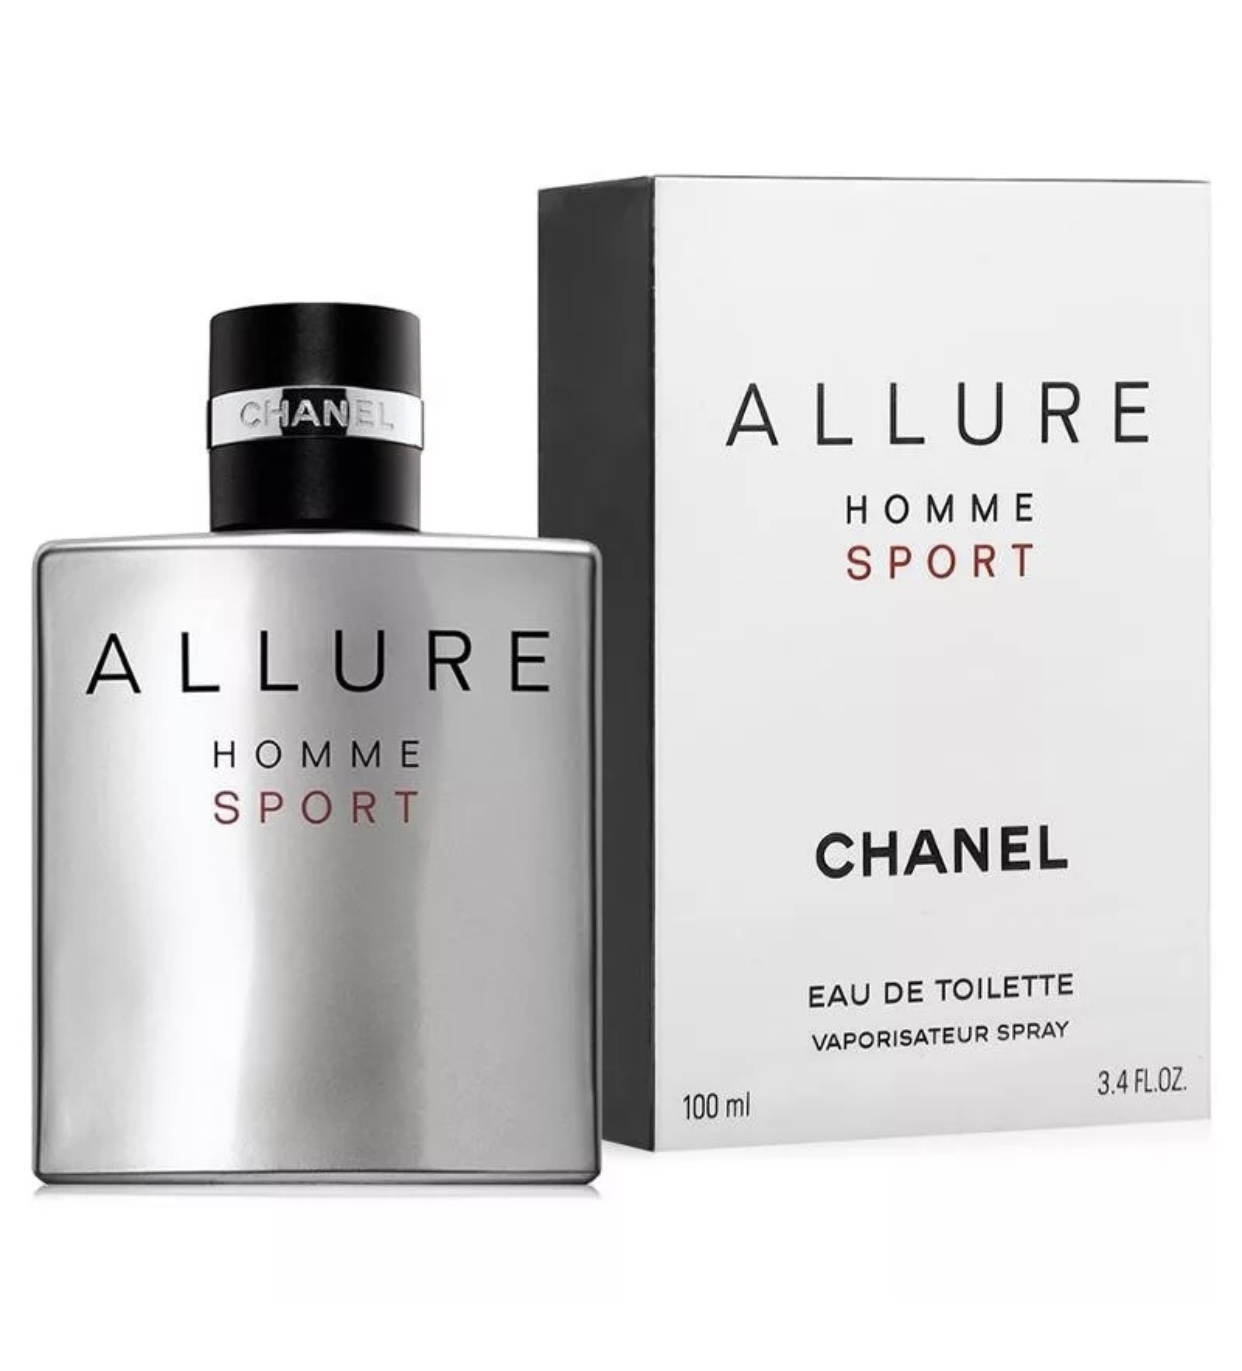 Home sport 1. Chanel Allure homme Sport 100ml. Chanel Allure Sport. Алюр Шанель 100мл хоум спорт мужские. Chanel Allure Sport 100 ml.